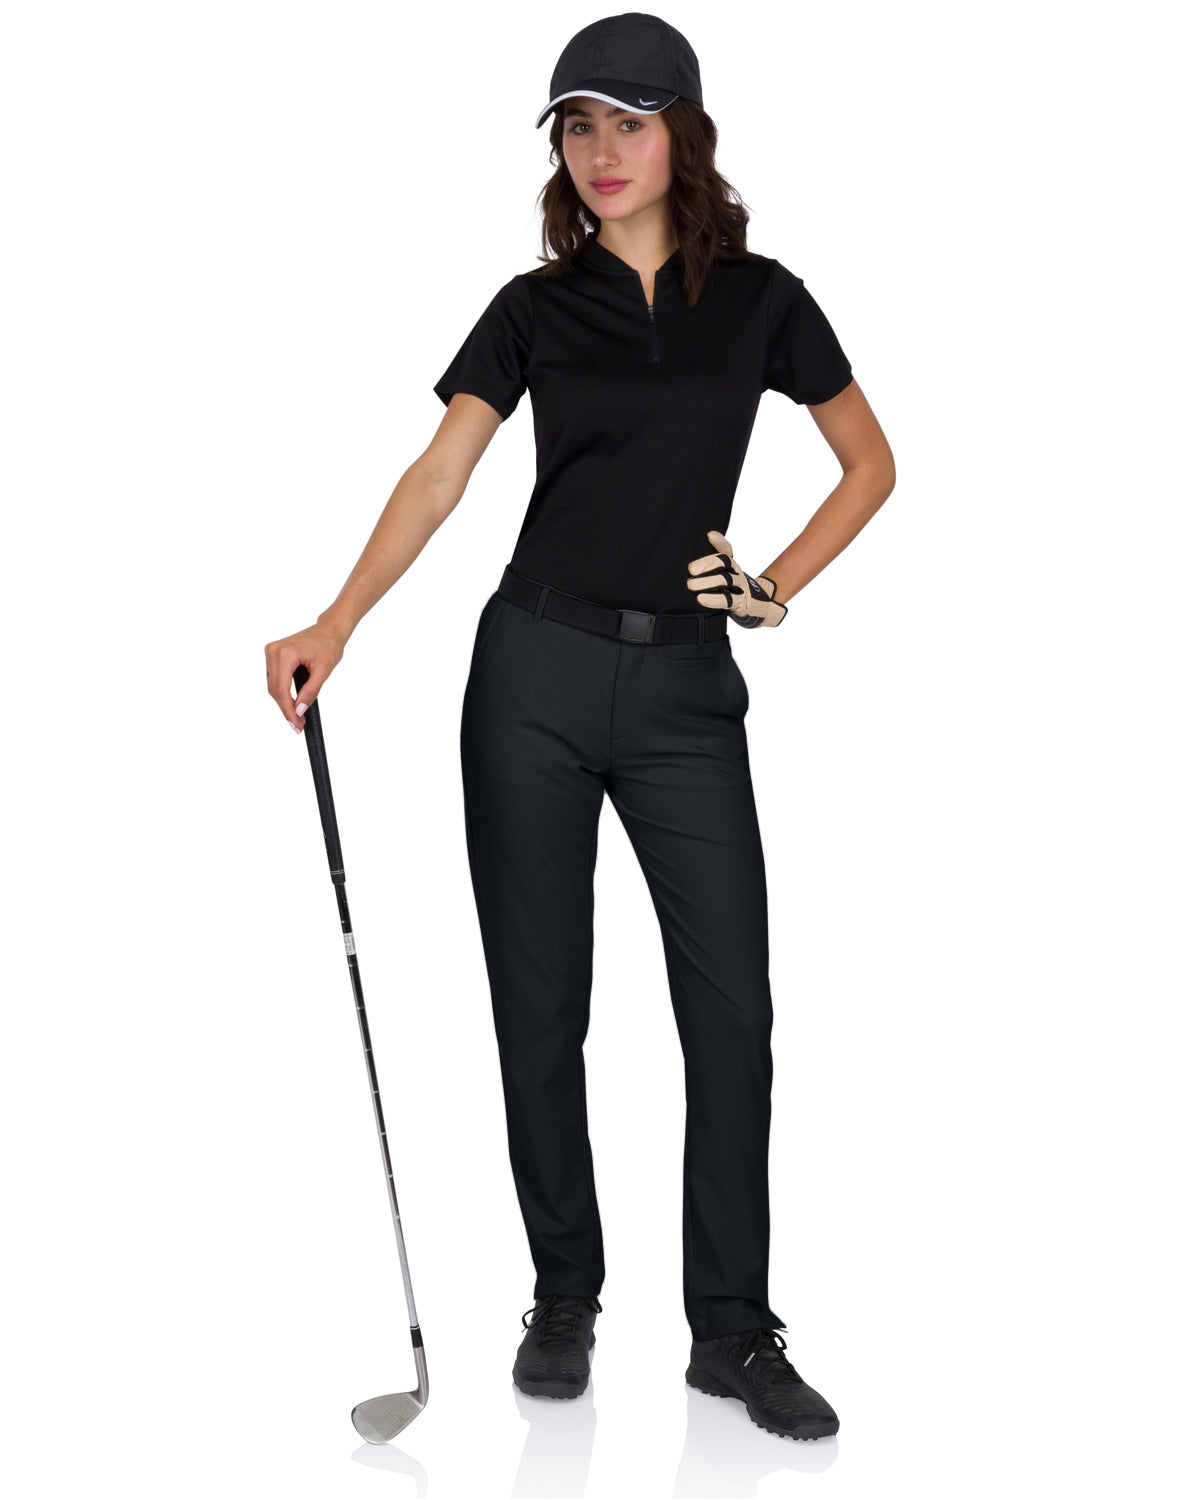 BALEAF Women's Golf Pants Stretch Lightweight Quick Dry Water